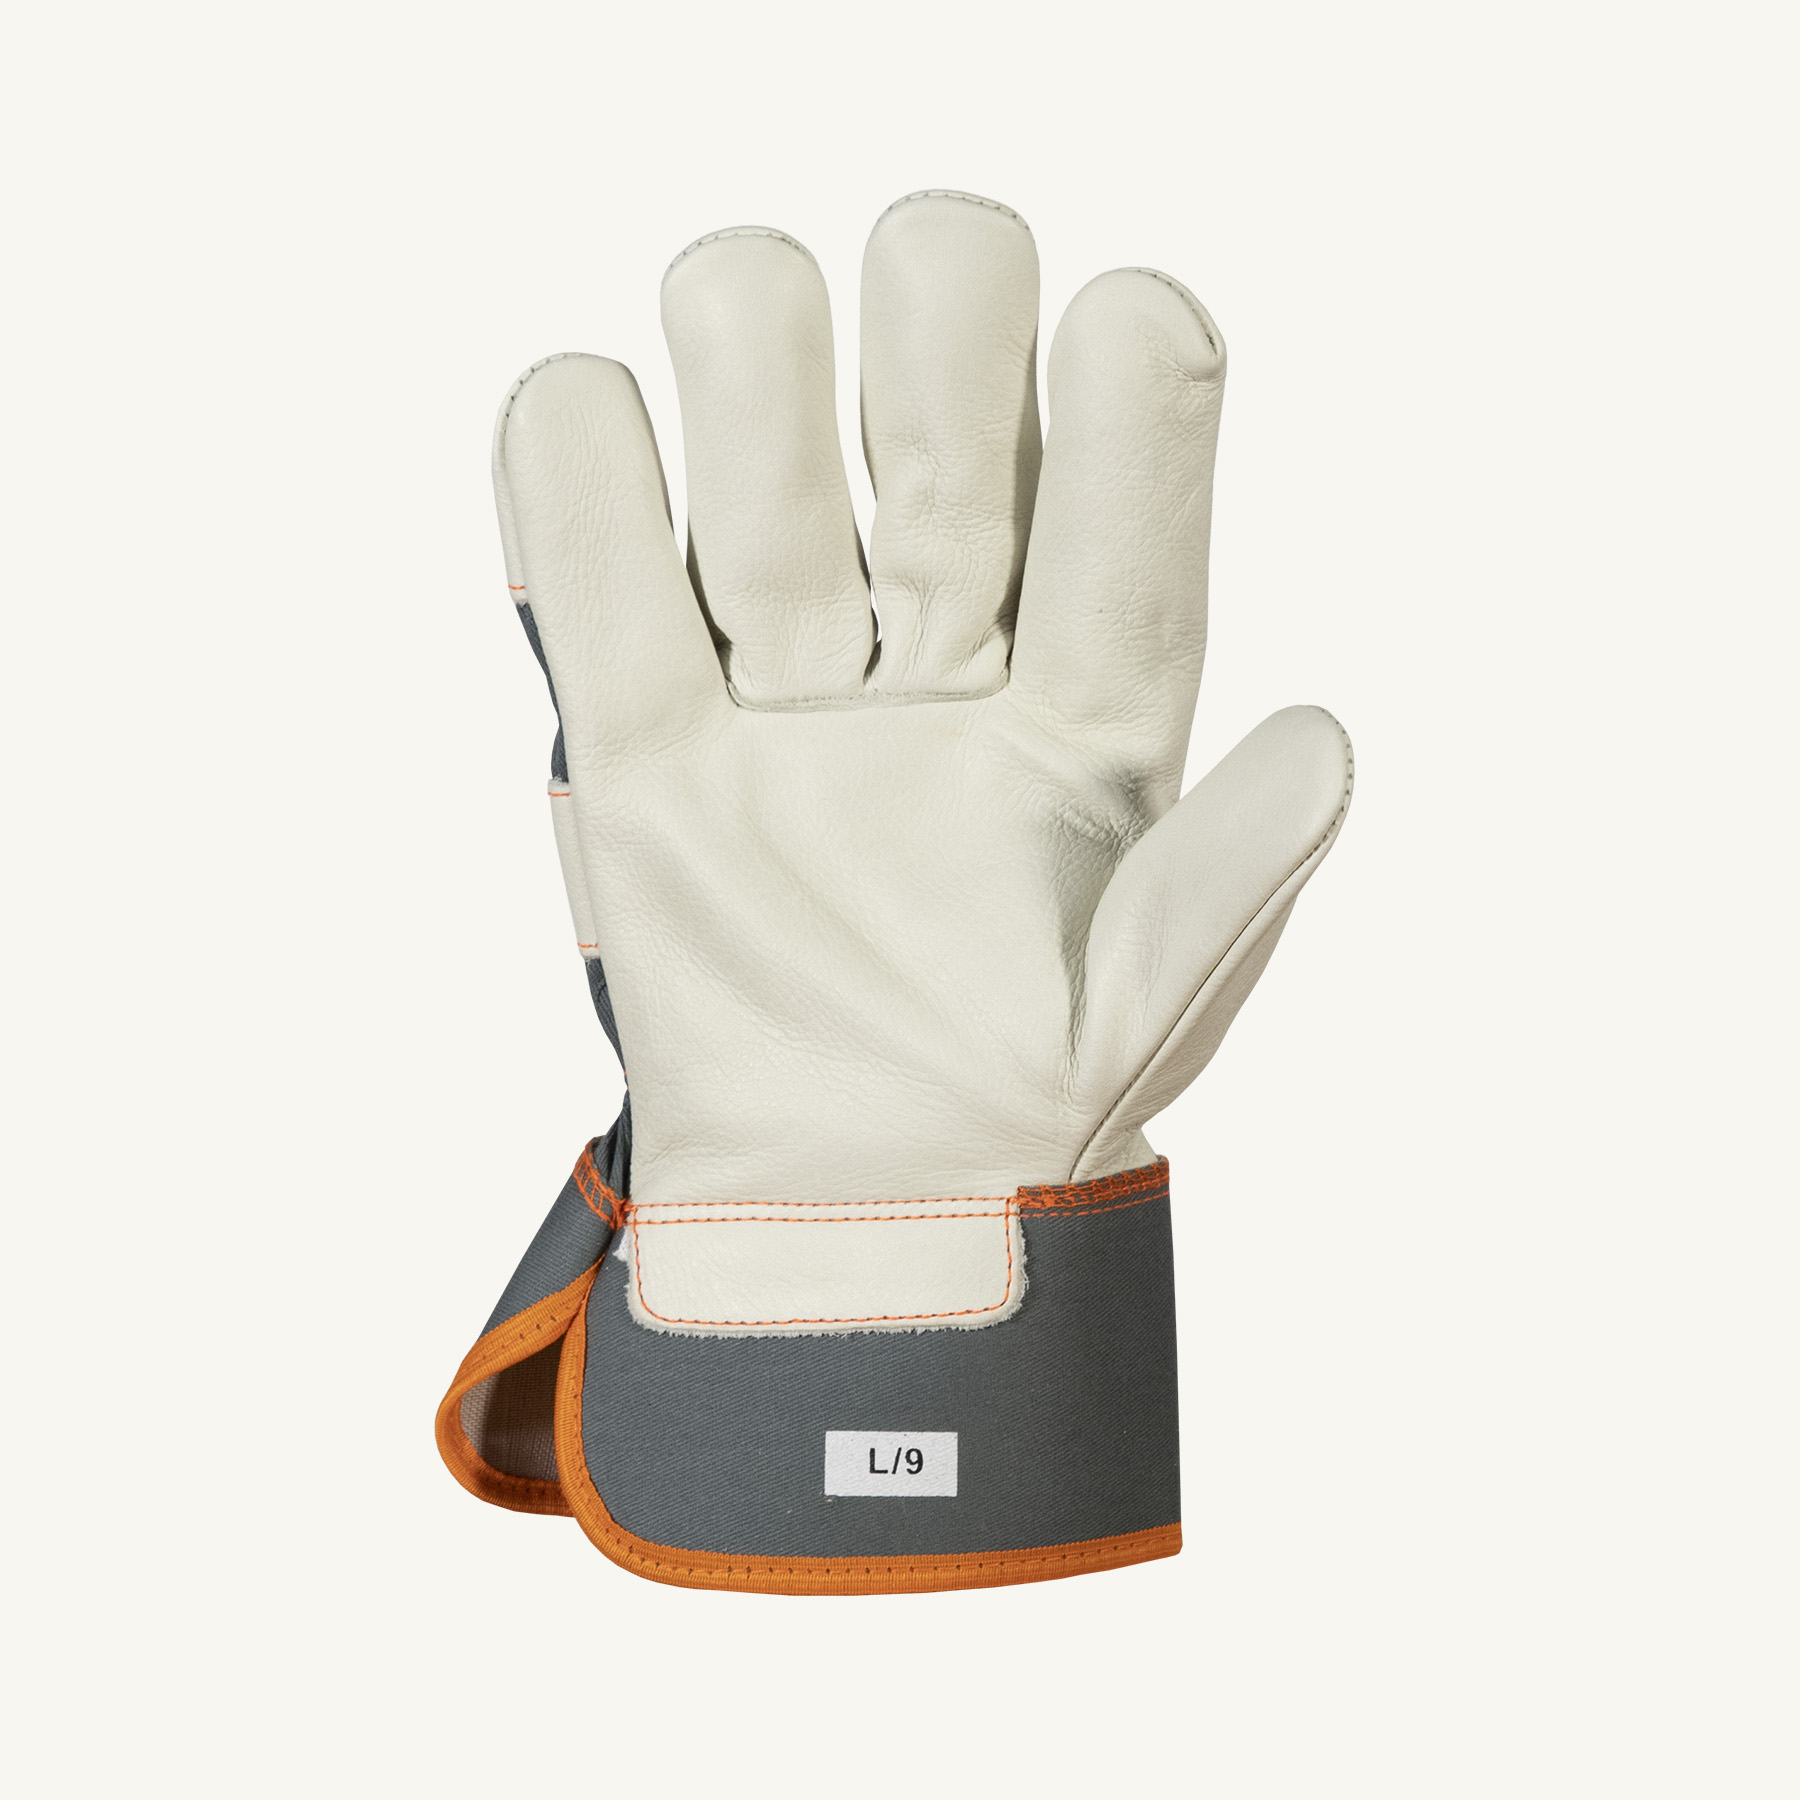 Superior Glove® Endura® Cotton Palm Lined Grain Fitters Glove #76B